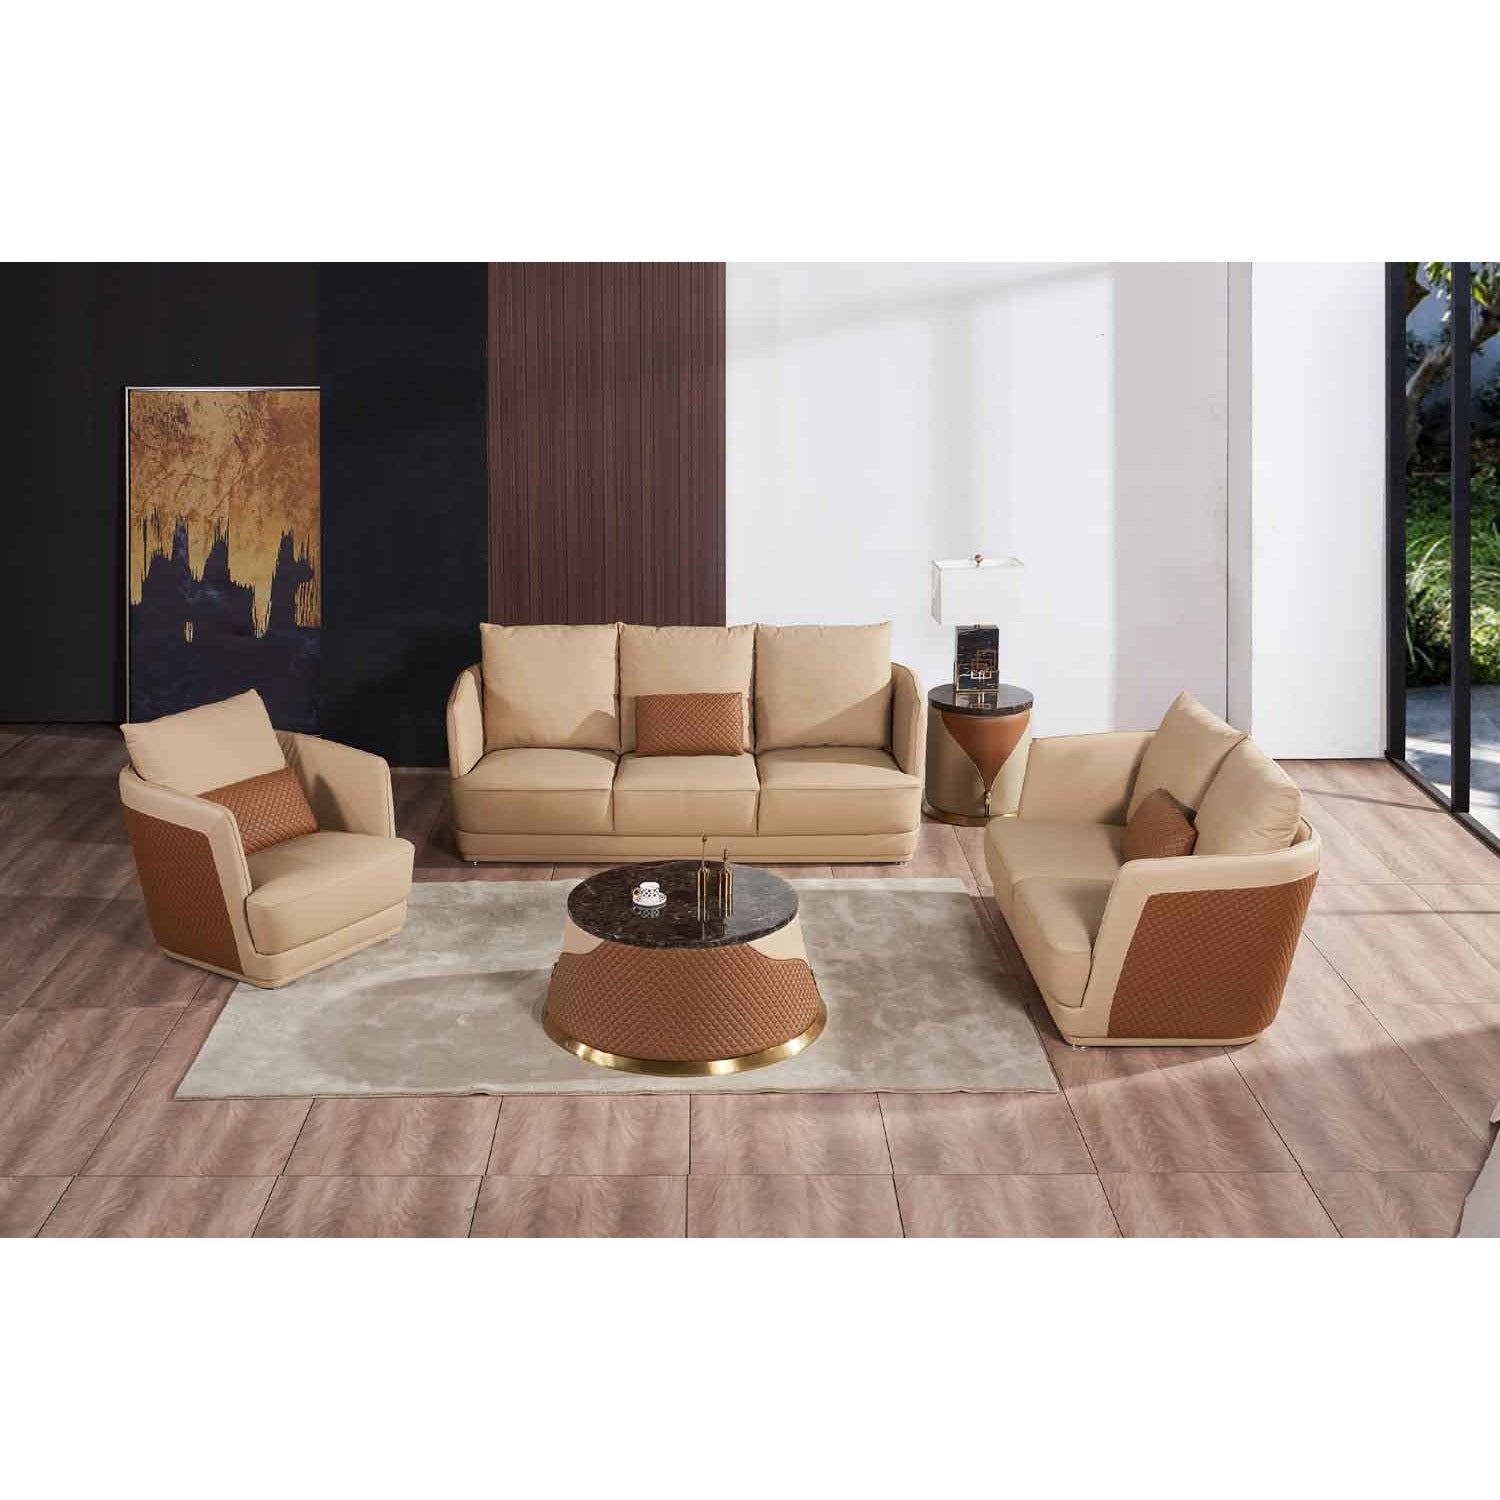 European Furniture - Glamour Chair in Tan-Brown - 51617-C - New Star Living